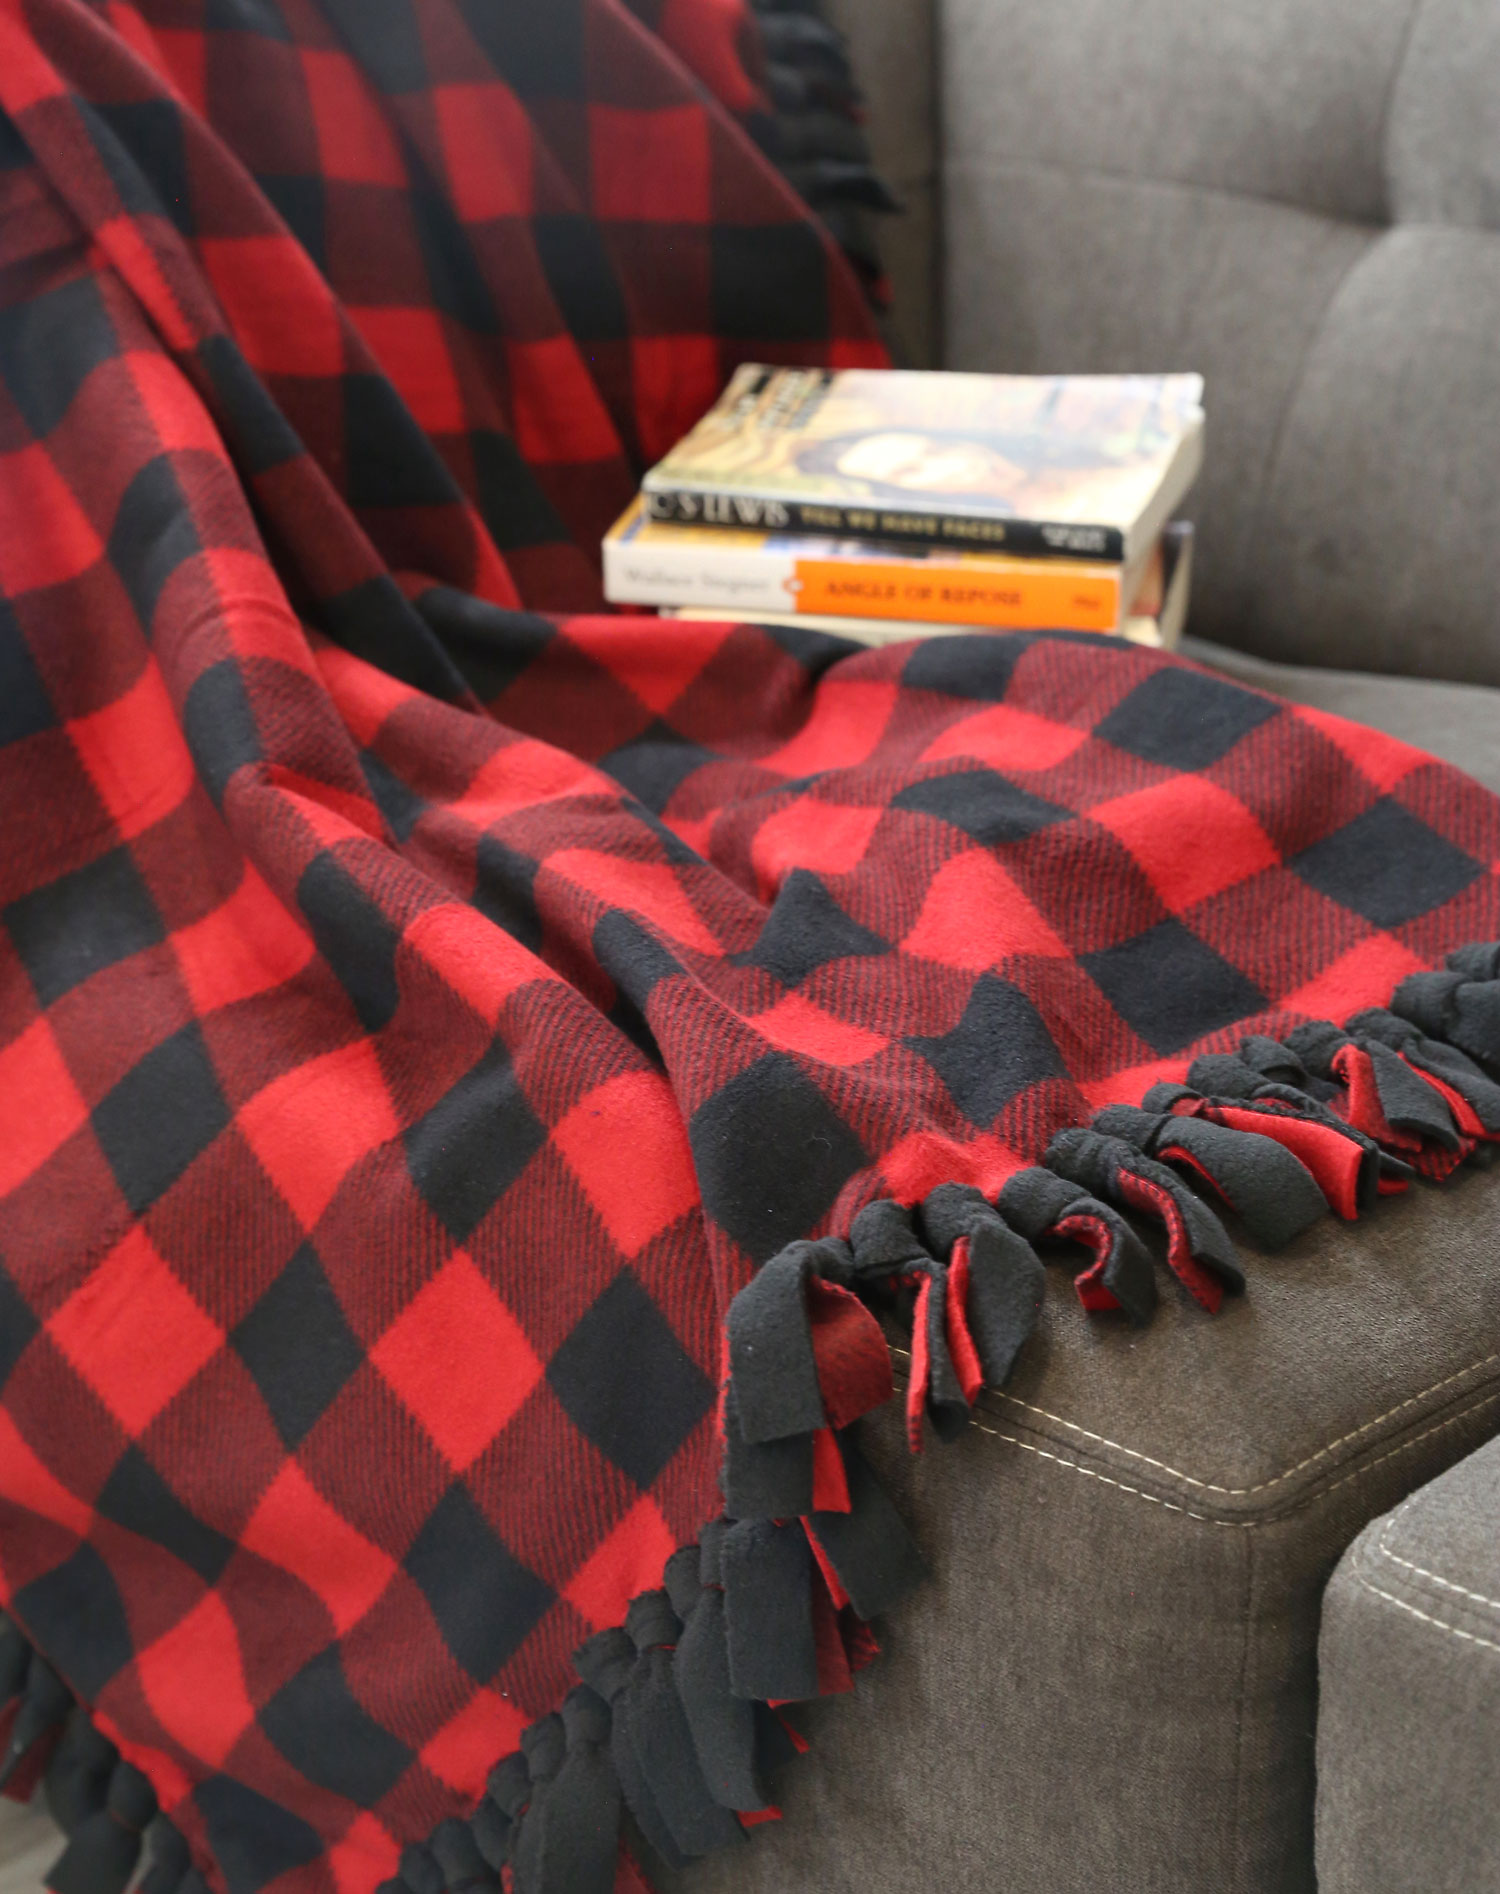 How to Make a No-Sew Fleece Blanket, Tutorial